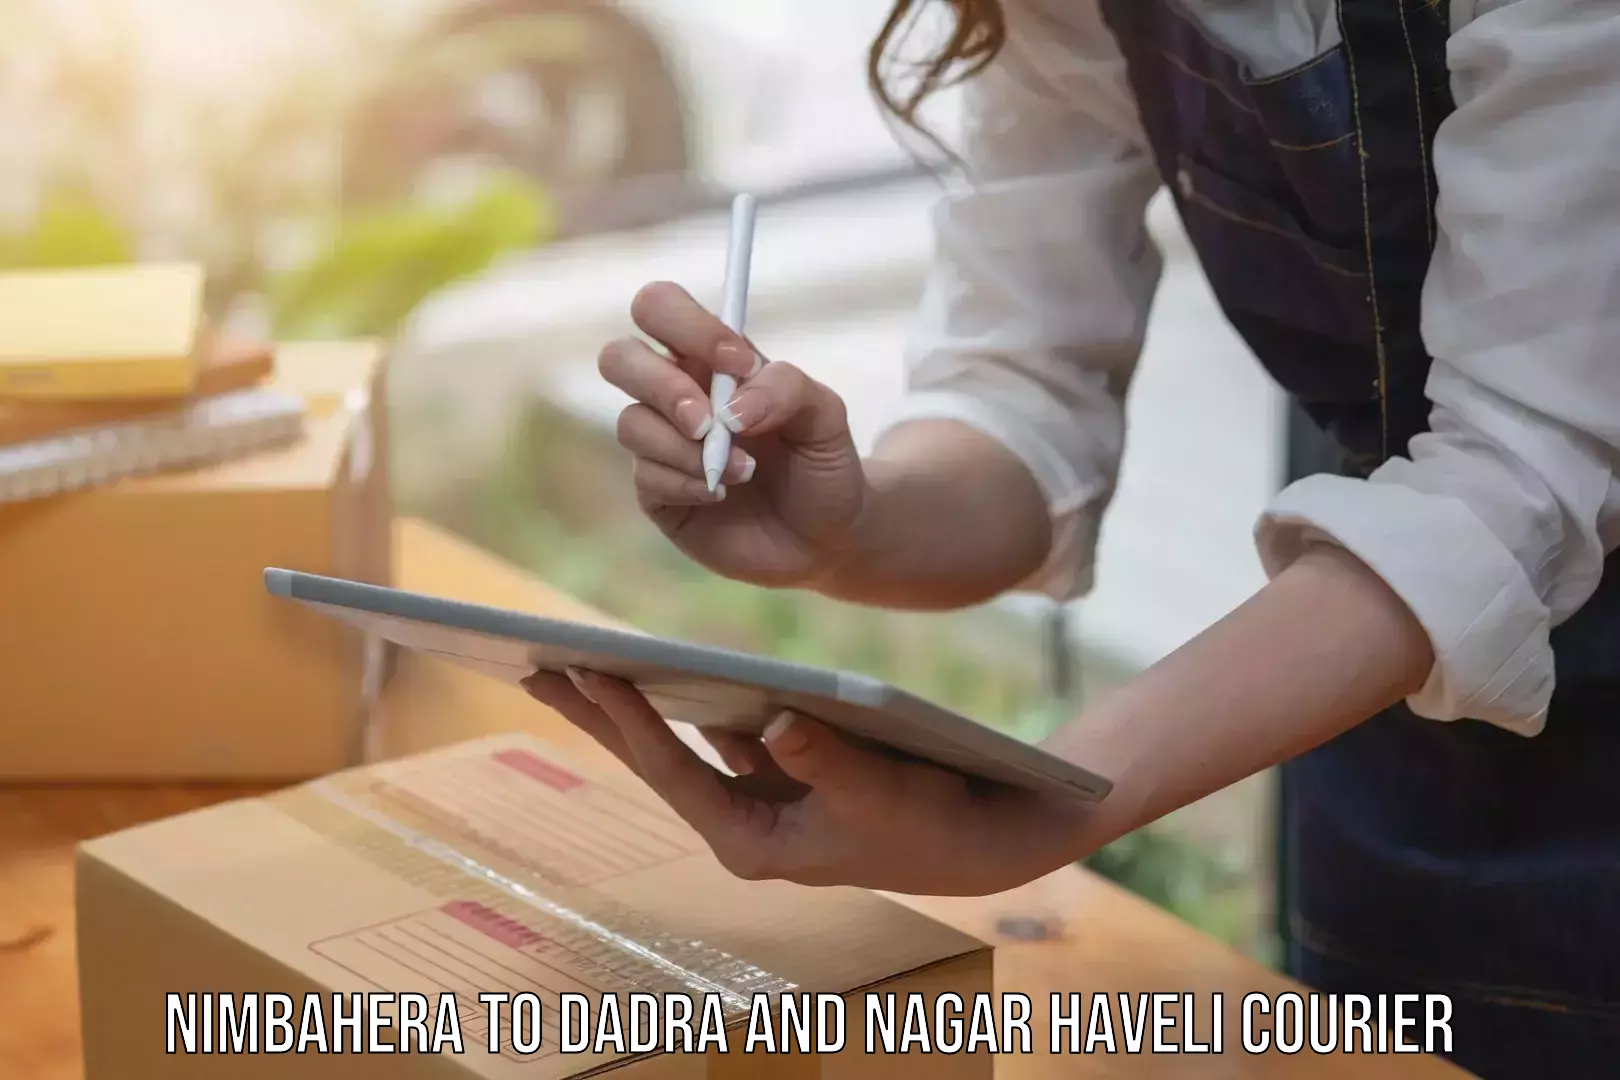 Professional courier handling Nimbahera to Dadra and Nagar Haveli